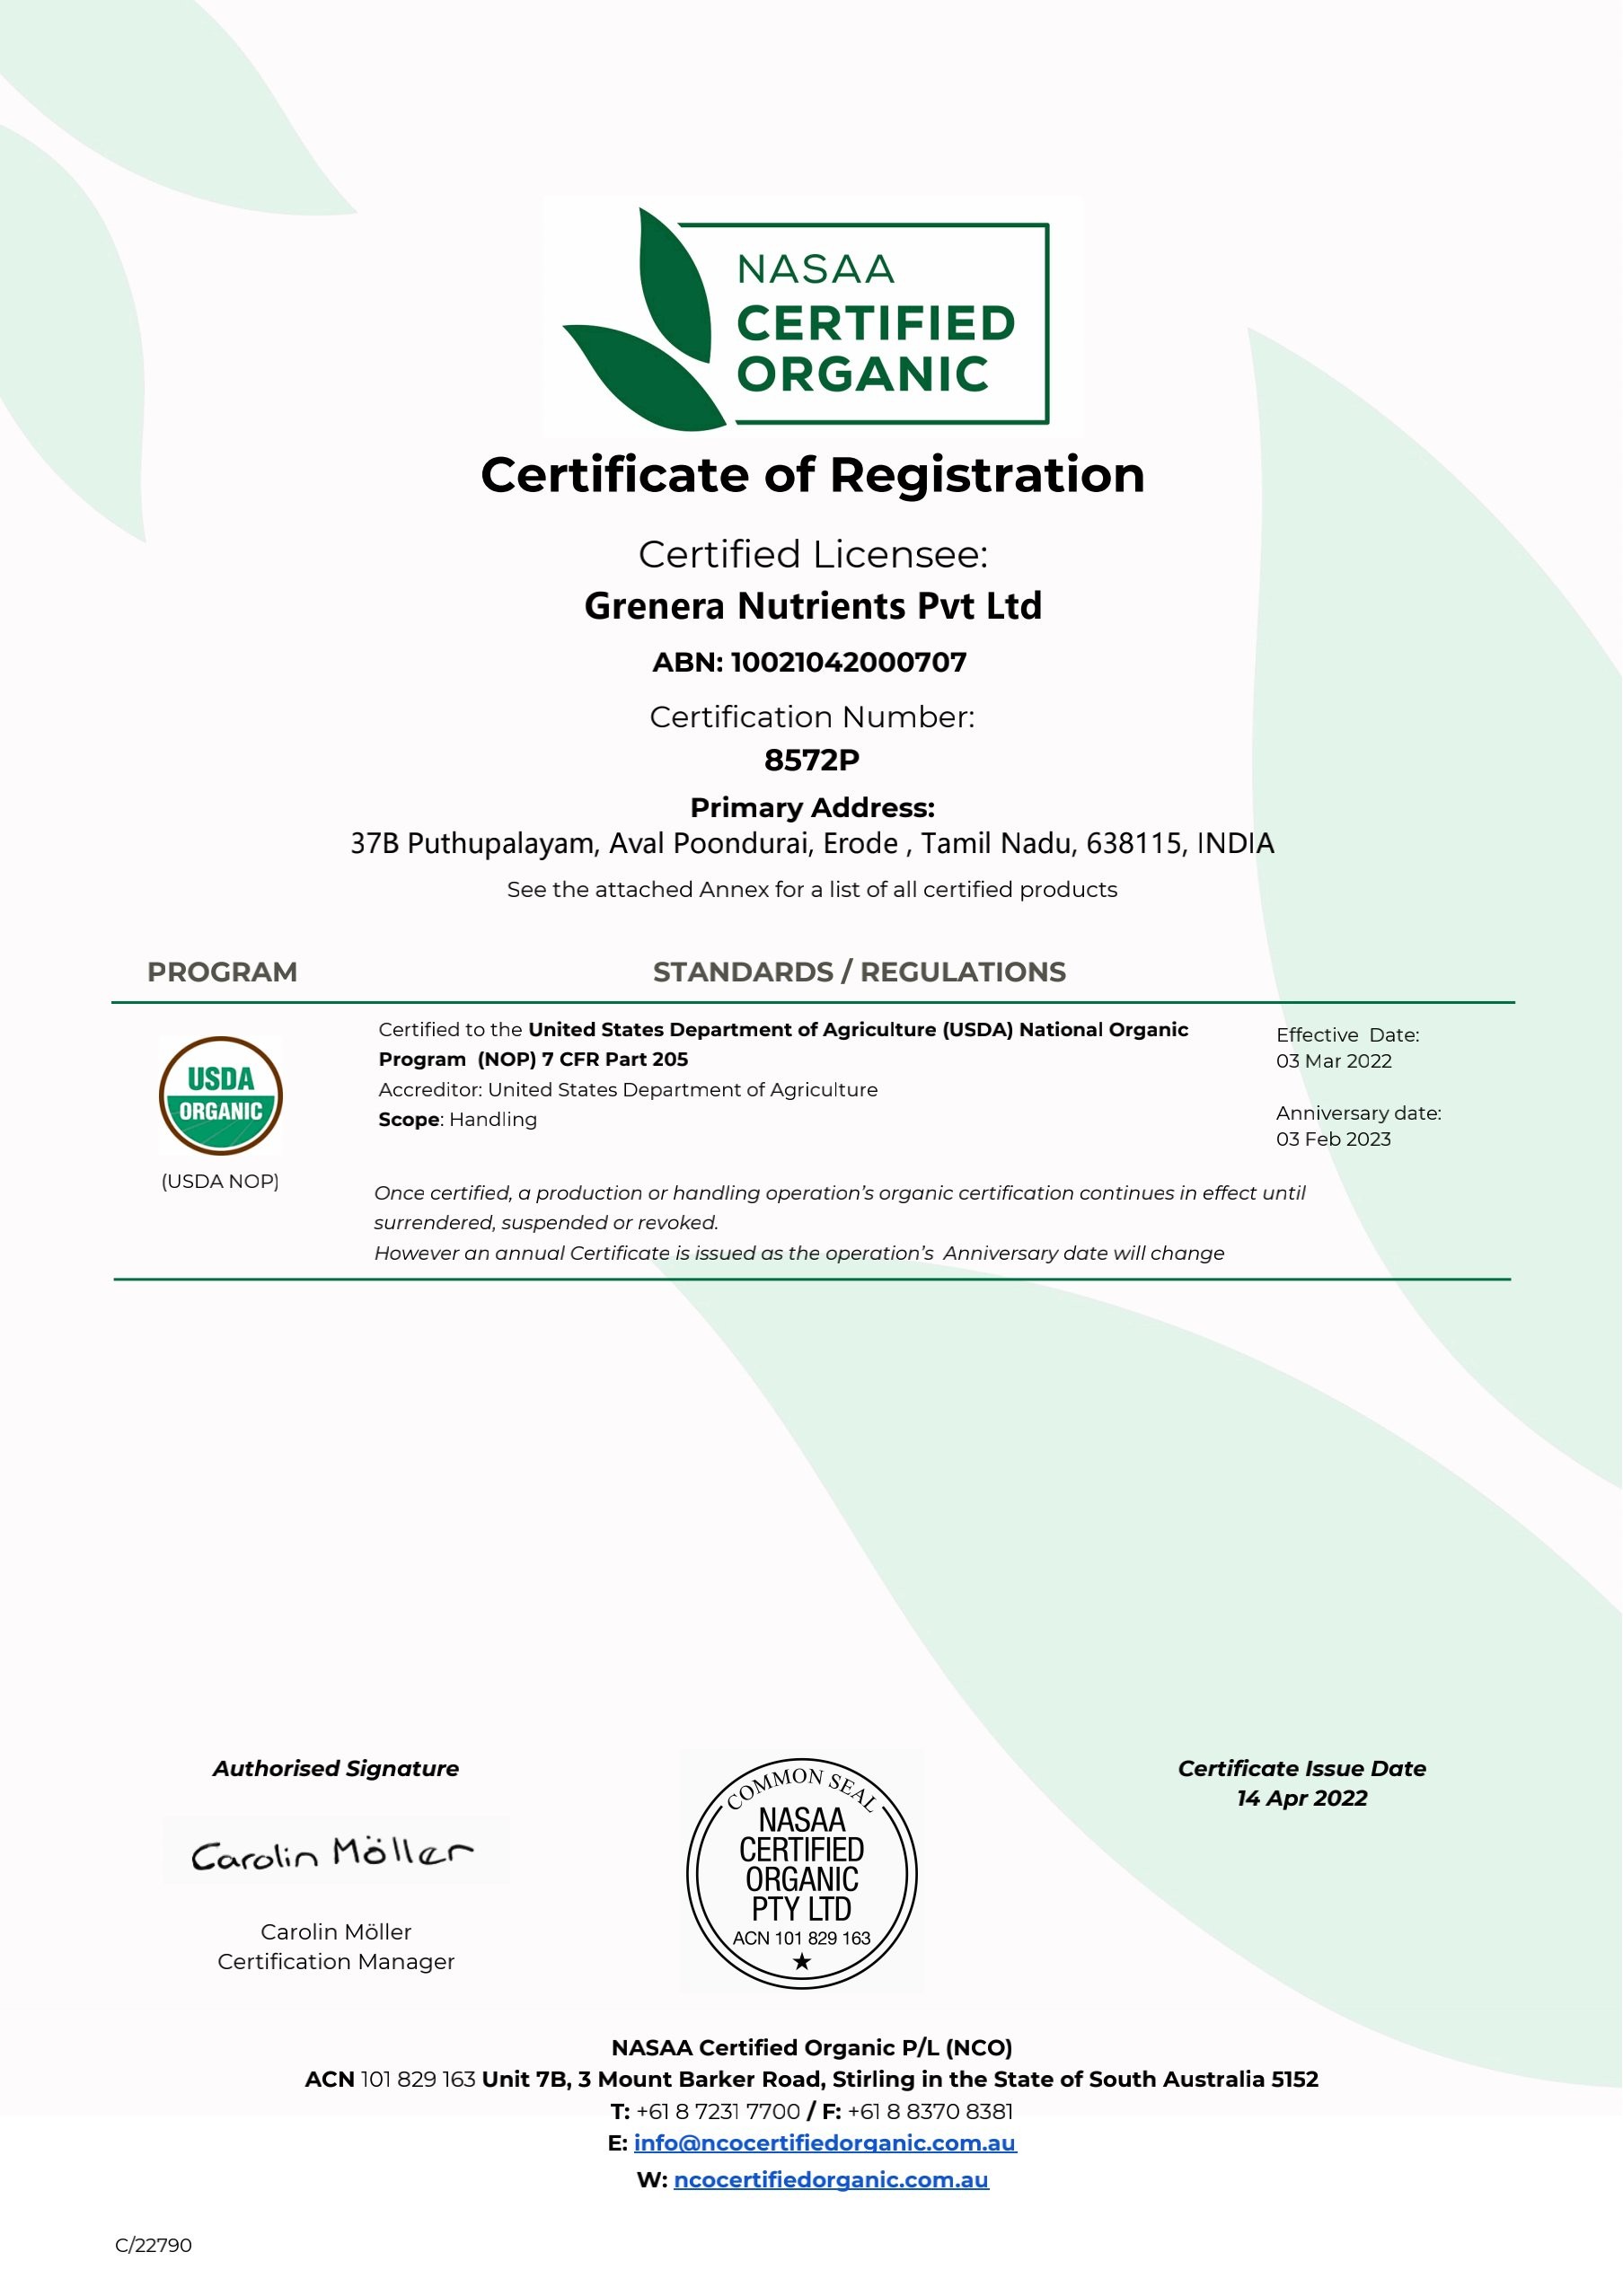 Registration certificate - GRENERA NUTRIENTS